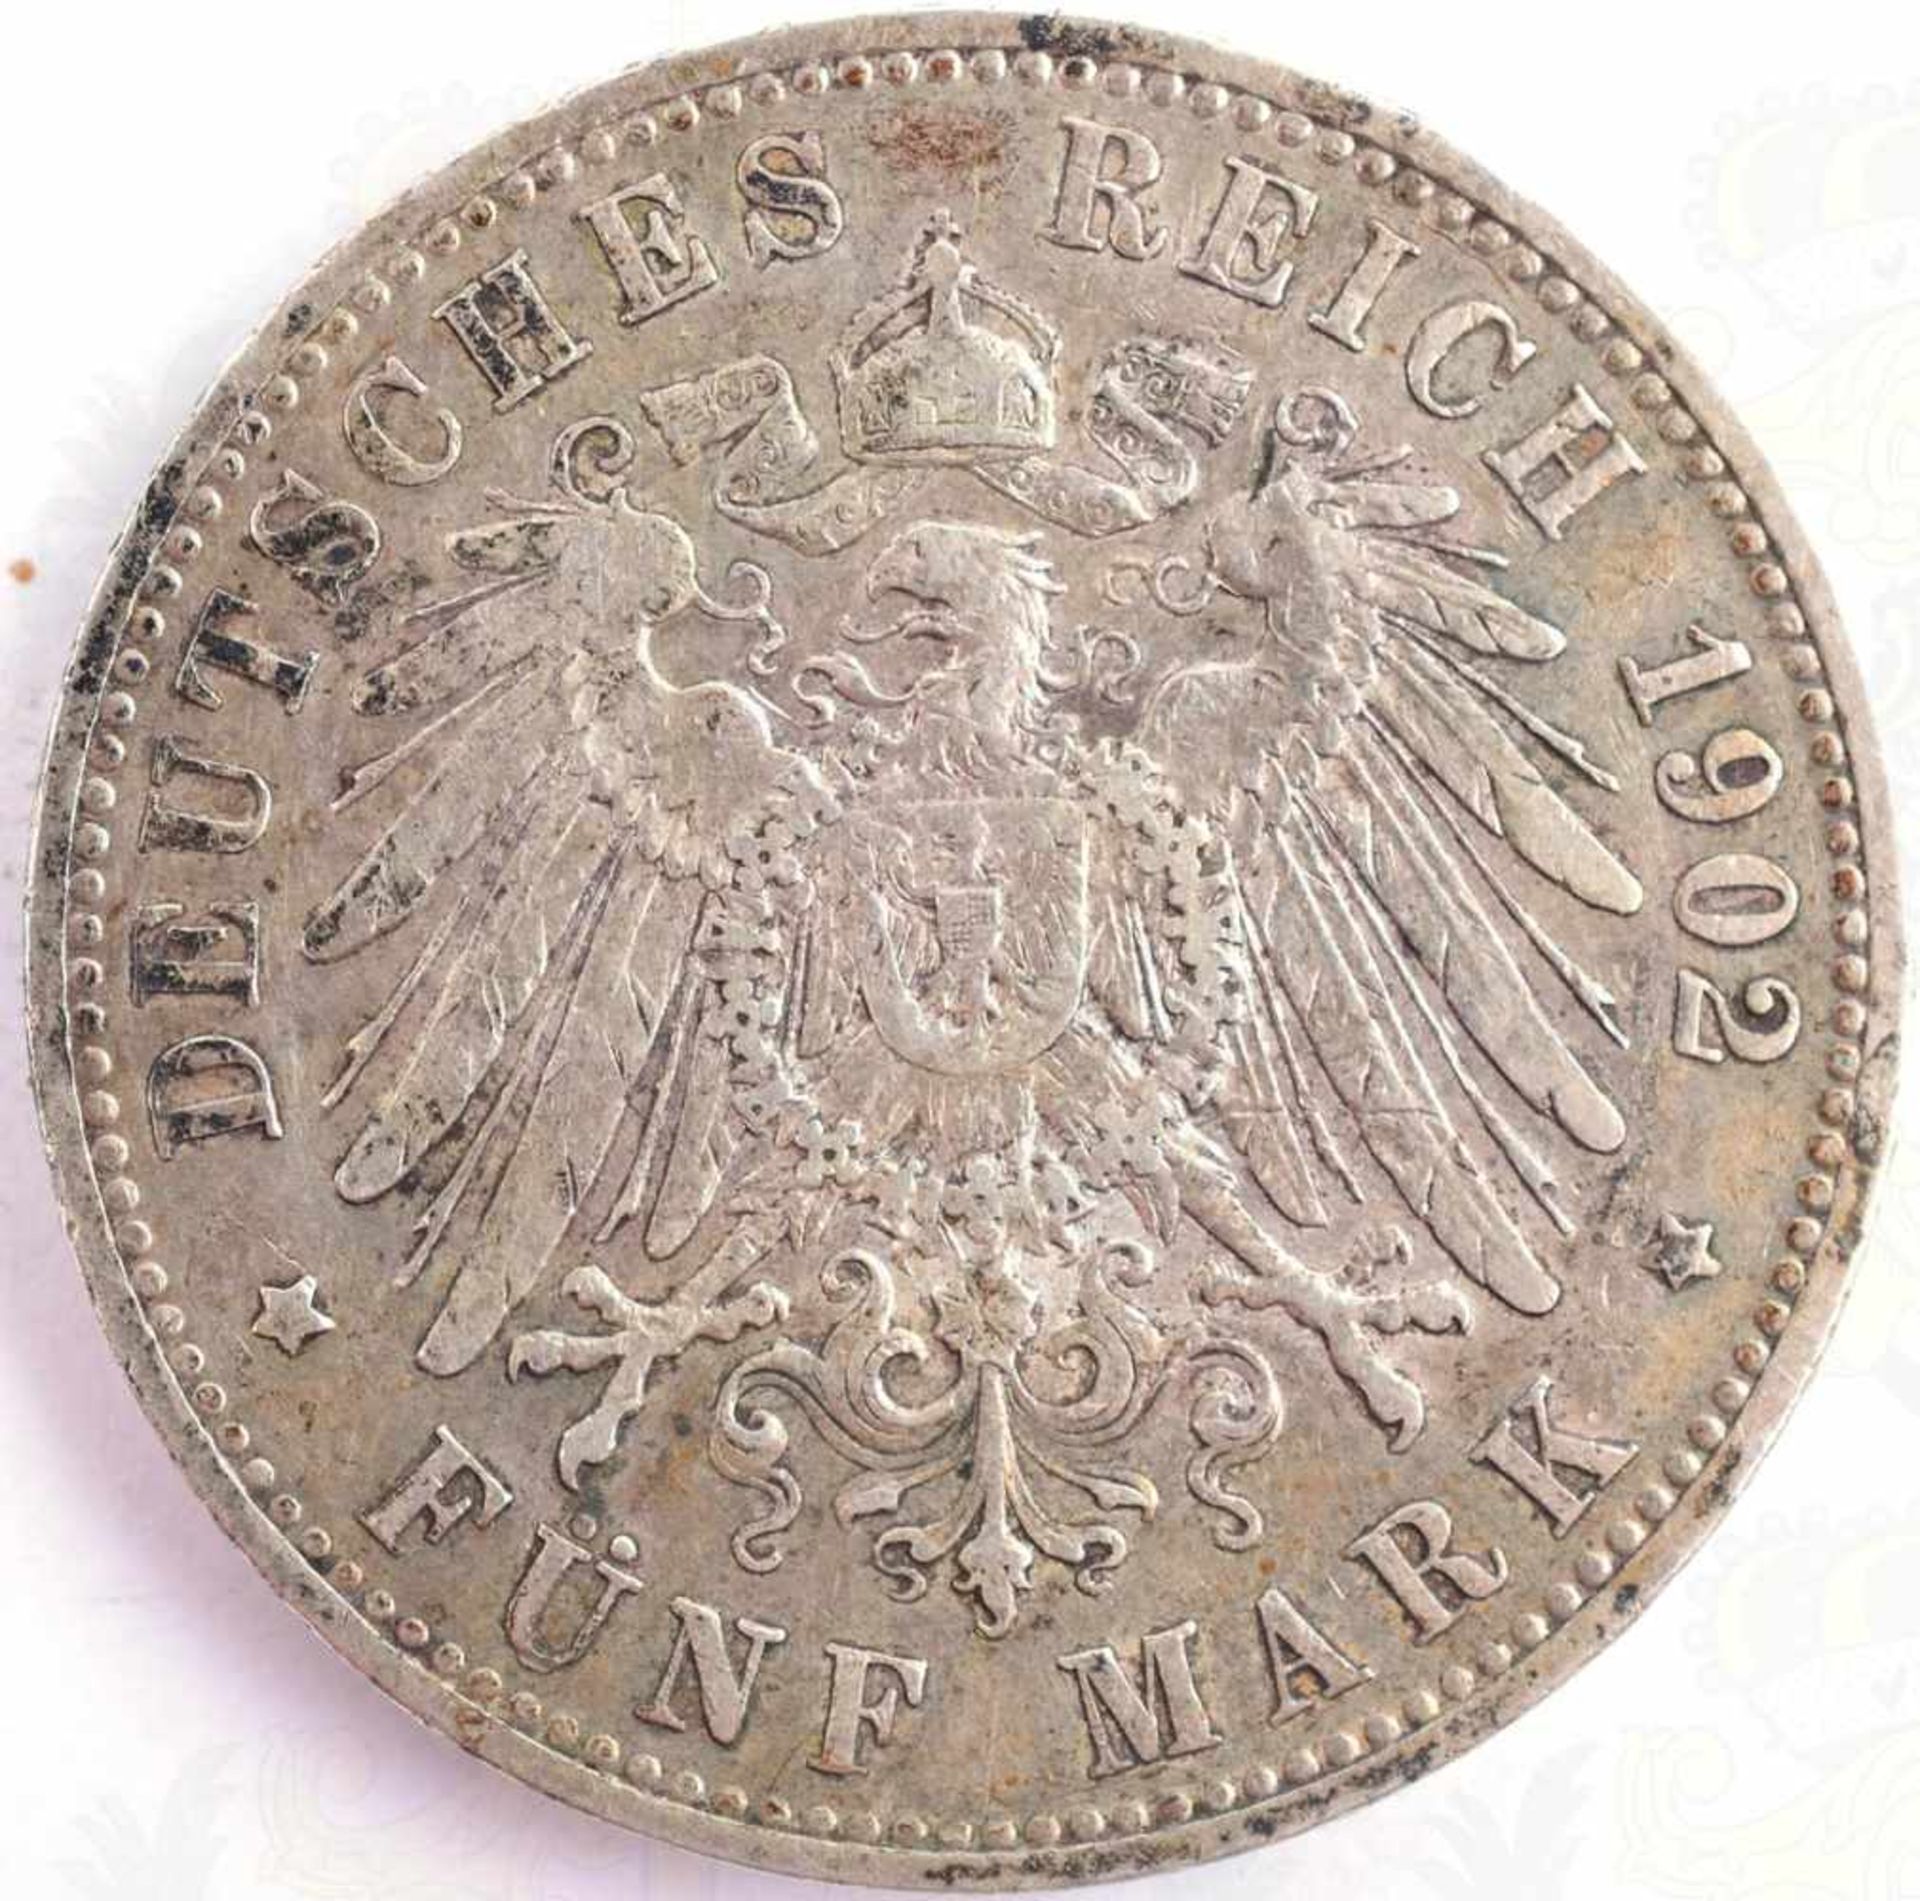 5 MARK PREUSSEN 1902, Silber, Prägestätte A, relief. Portrait Kaiser Wilhelm II., Ø 38mm, Belag - Bild 2 aus 2